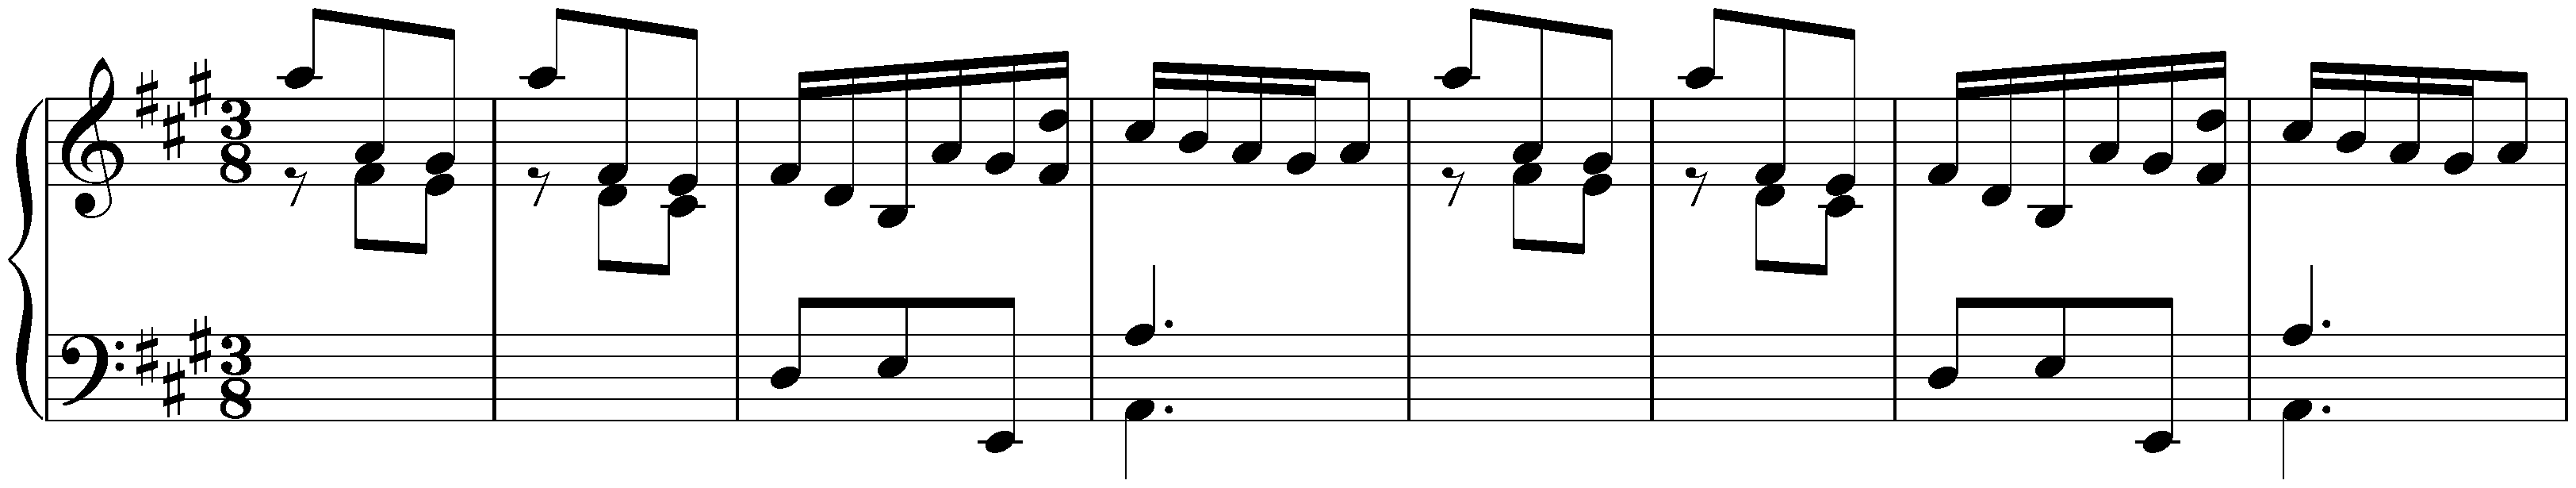 Sonatas found in New York; 1. A major